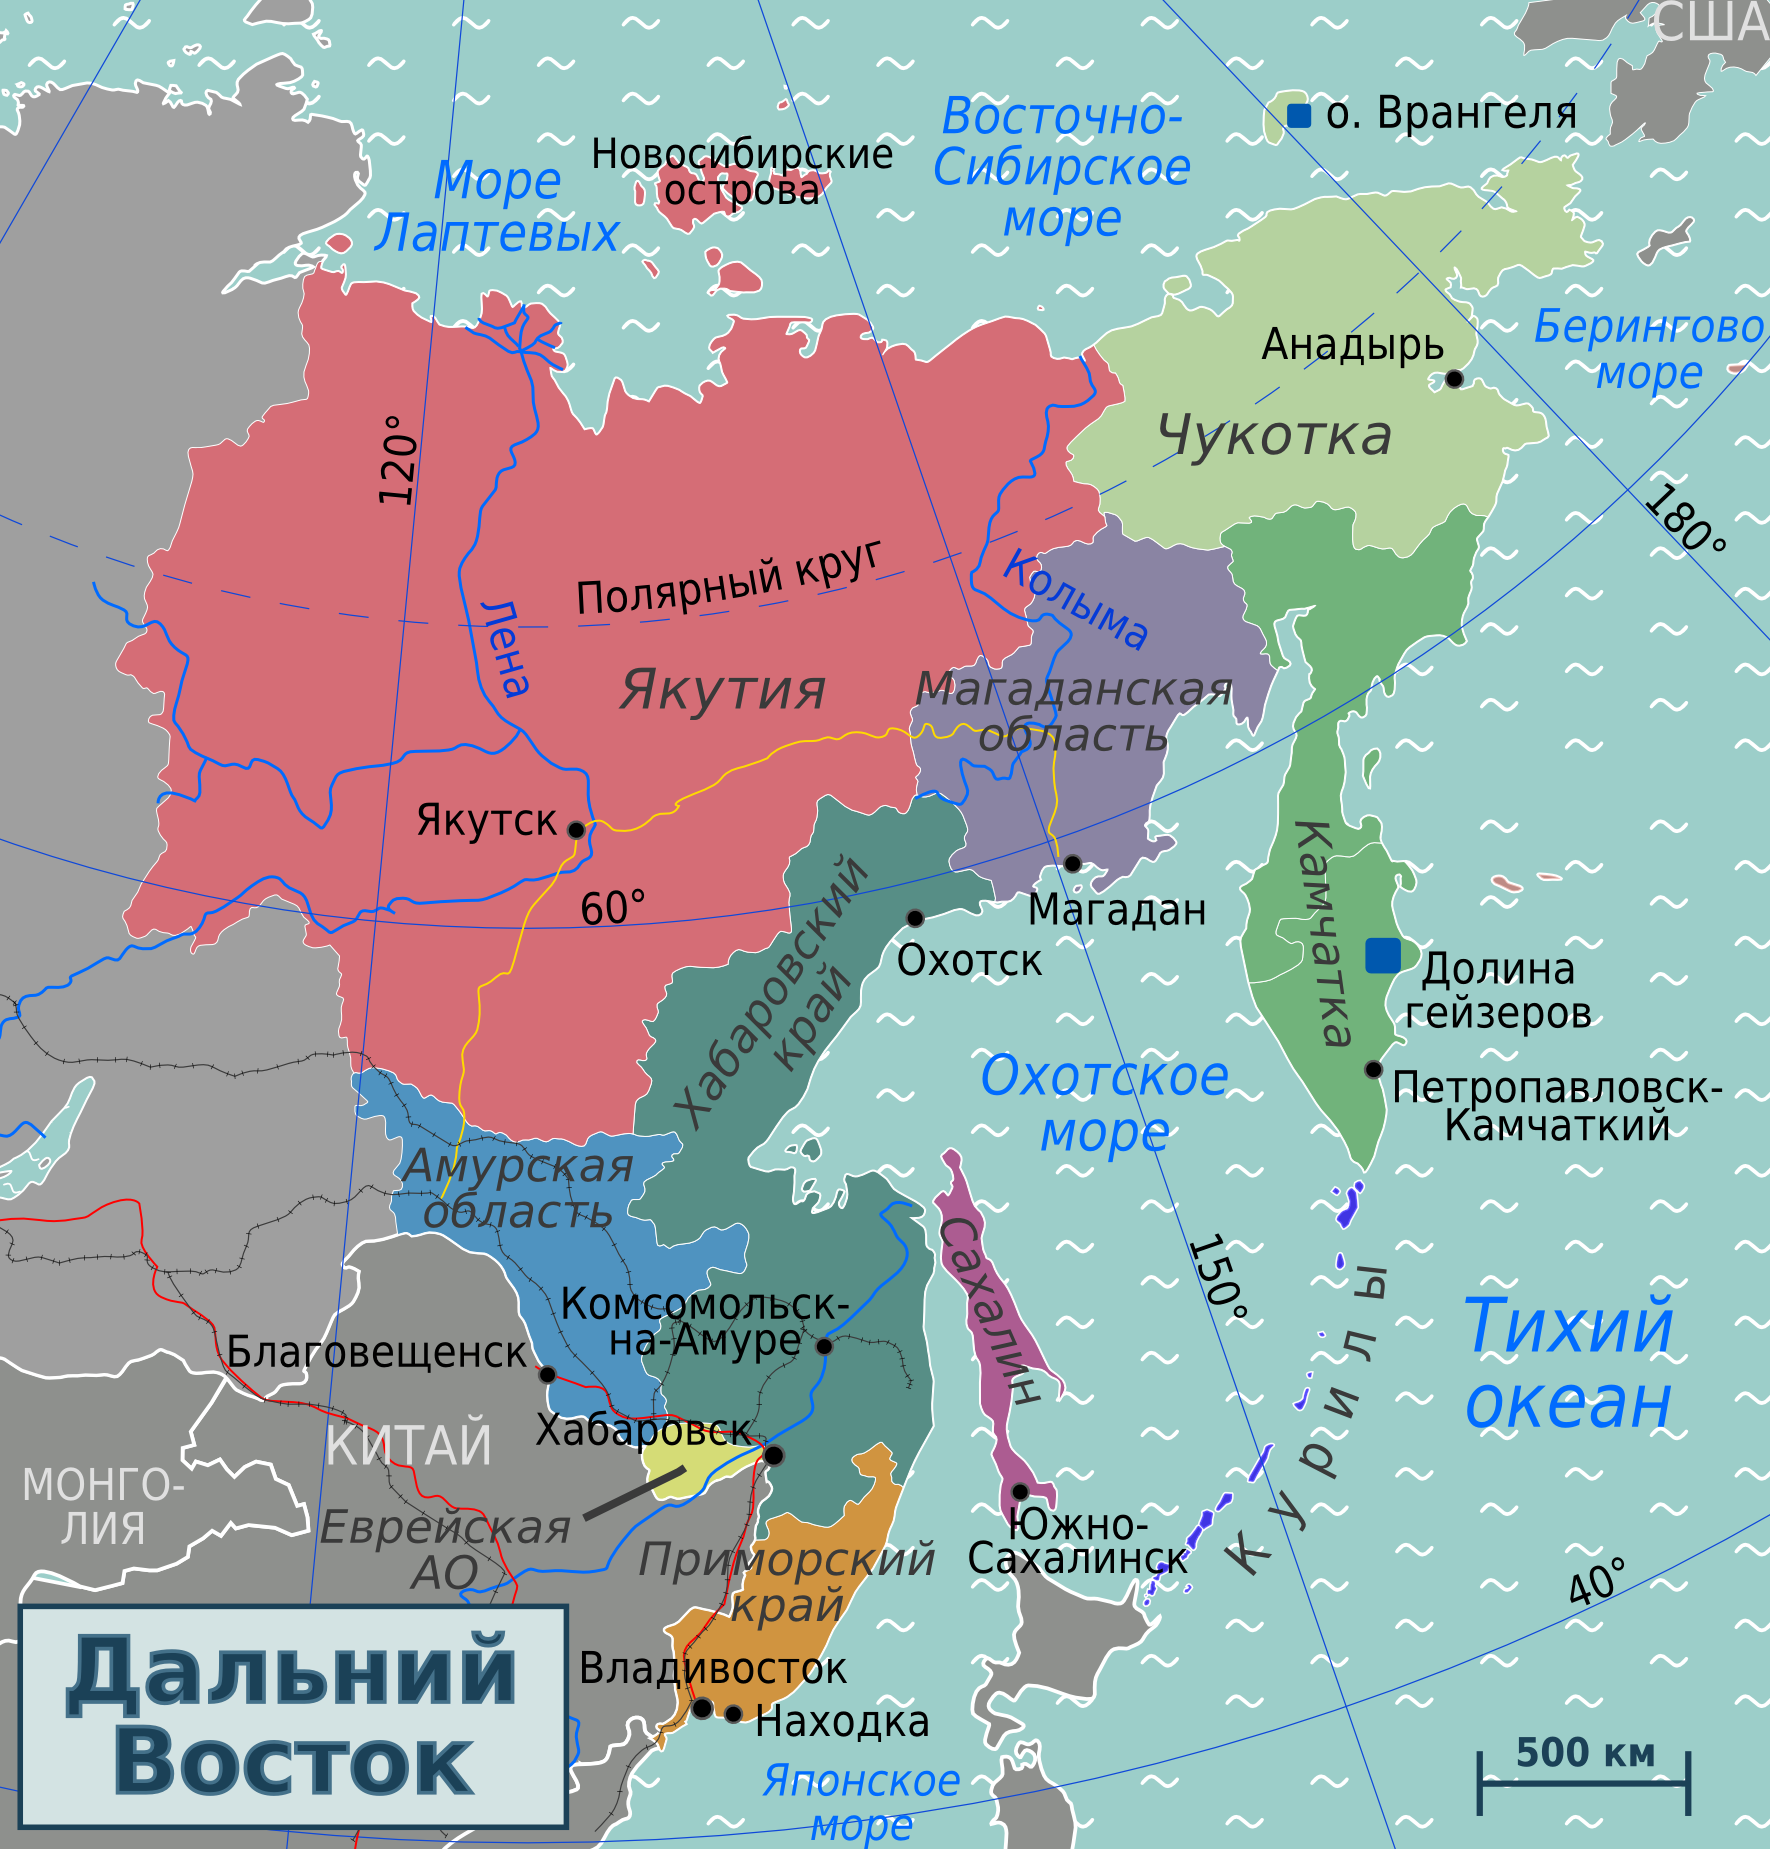 Russian Far East regions map2 (ru).png.